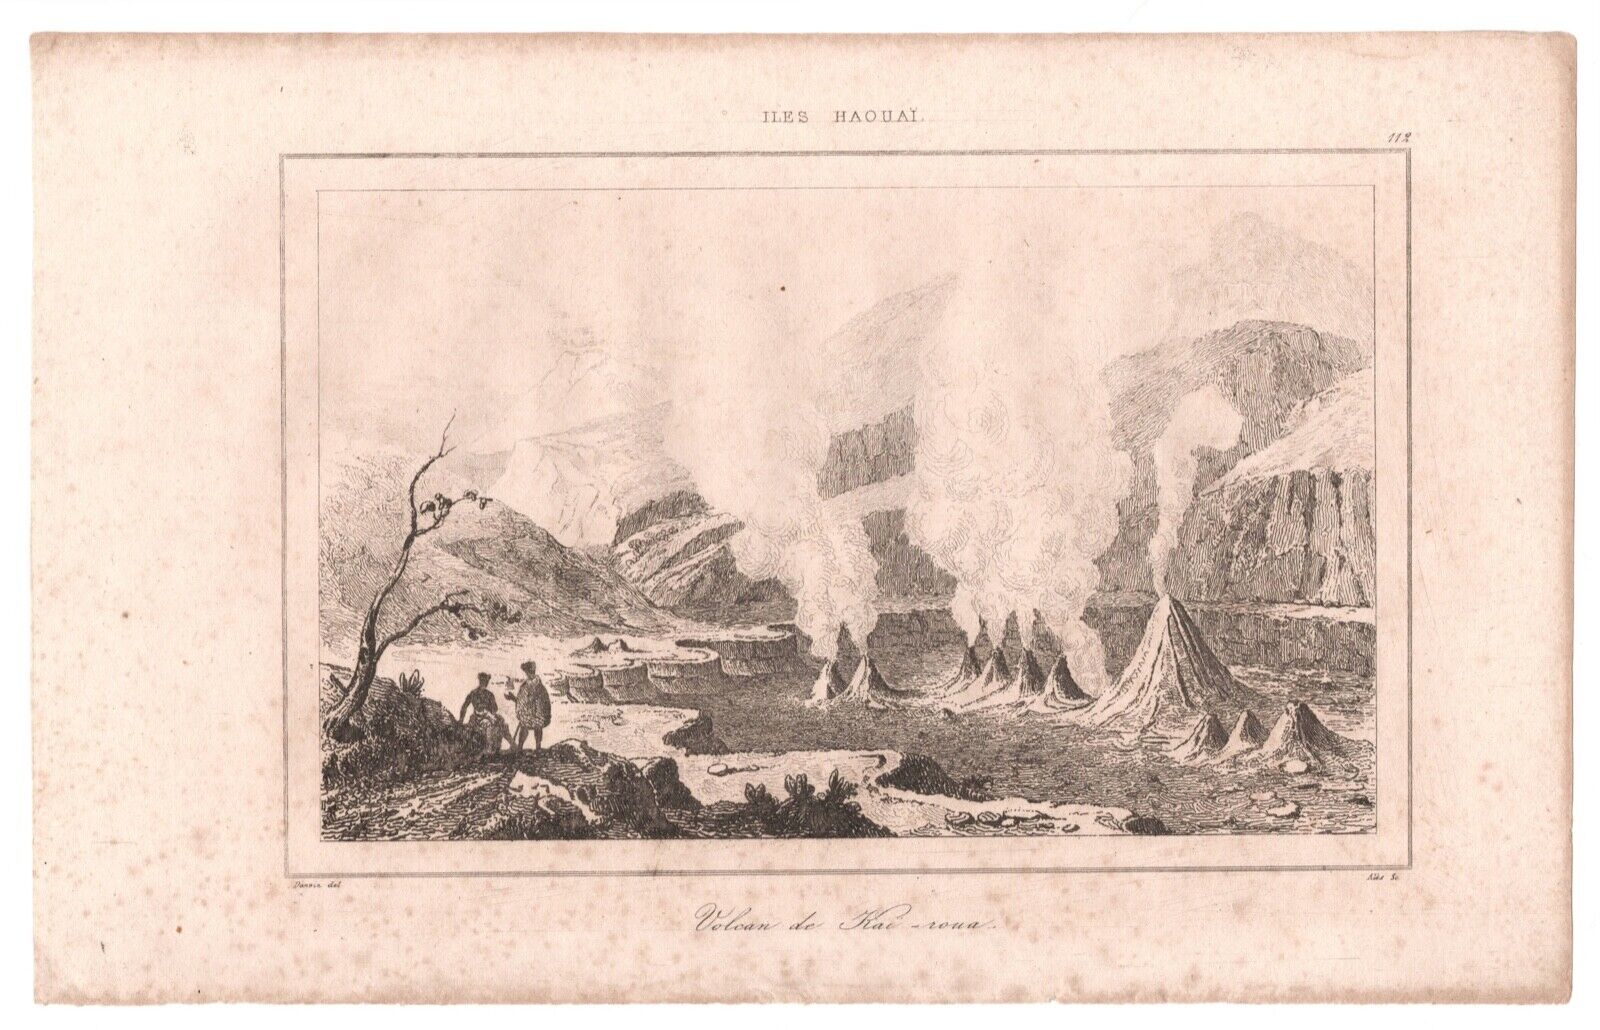 1836 Rienzi HAWAII engraving ~ Volcan de Kaï-roua ~ Halema\'uma\'u KILAUEA Volcano